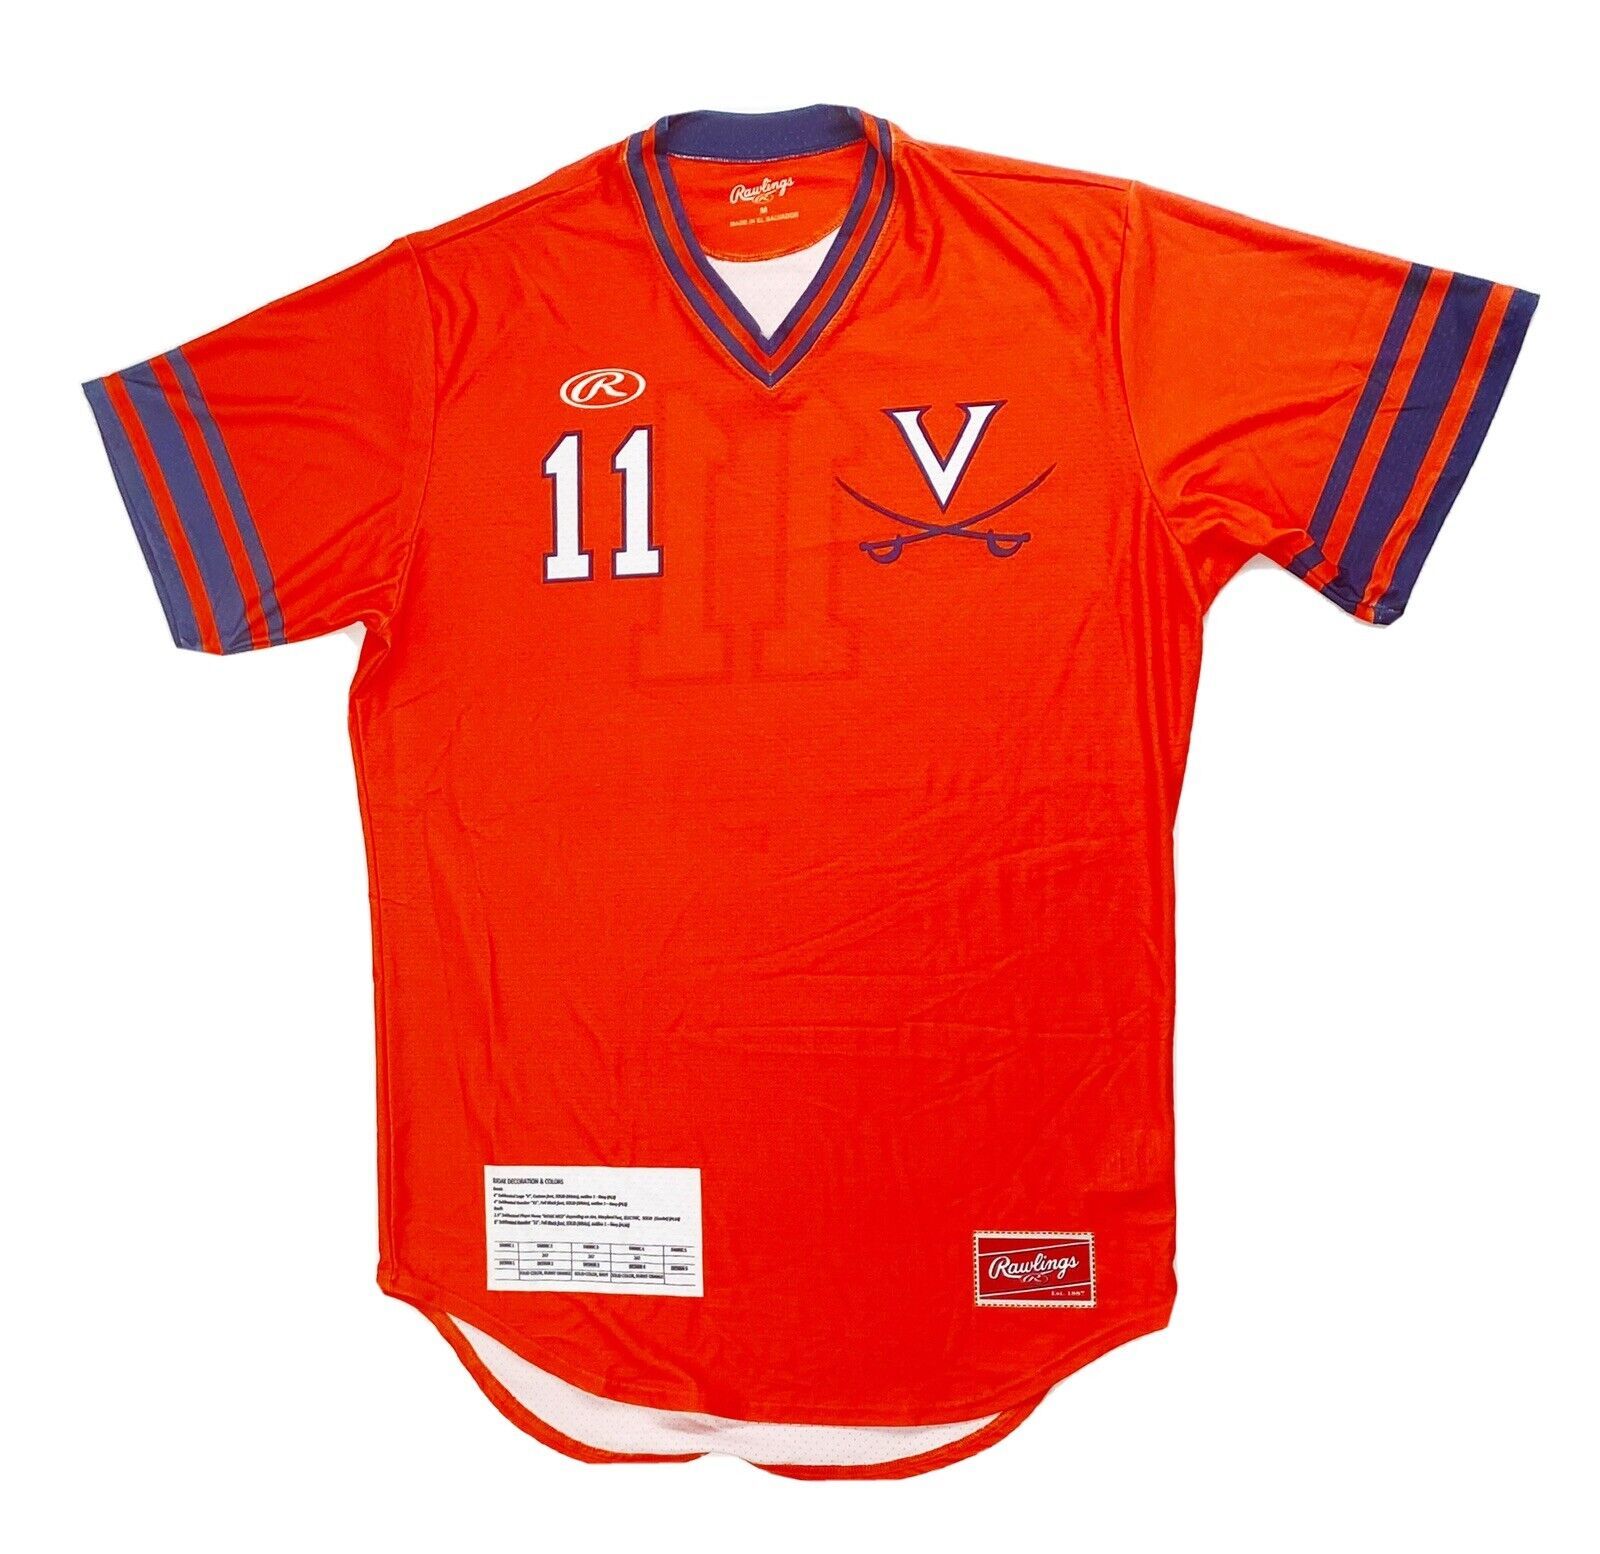 Primary image for Rawlings Virginia Short Sleeve Baseball Practice Jersey Mesh Men's Medium Orange